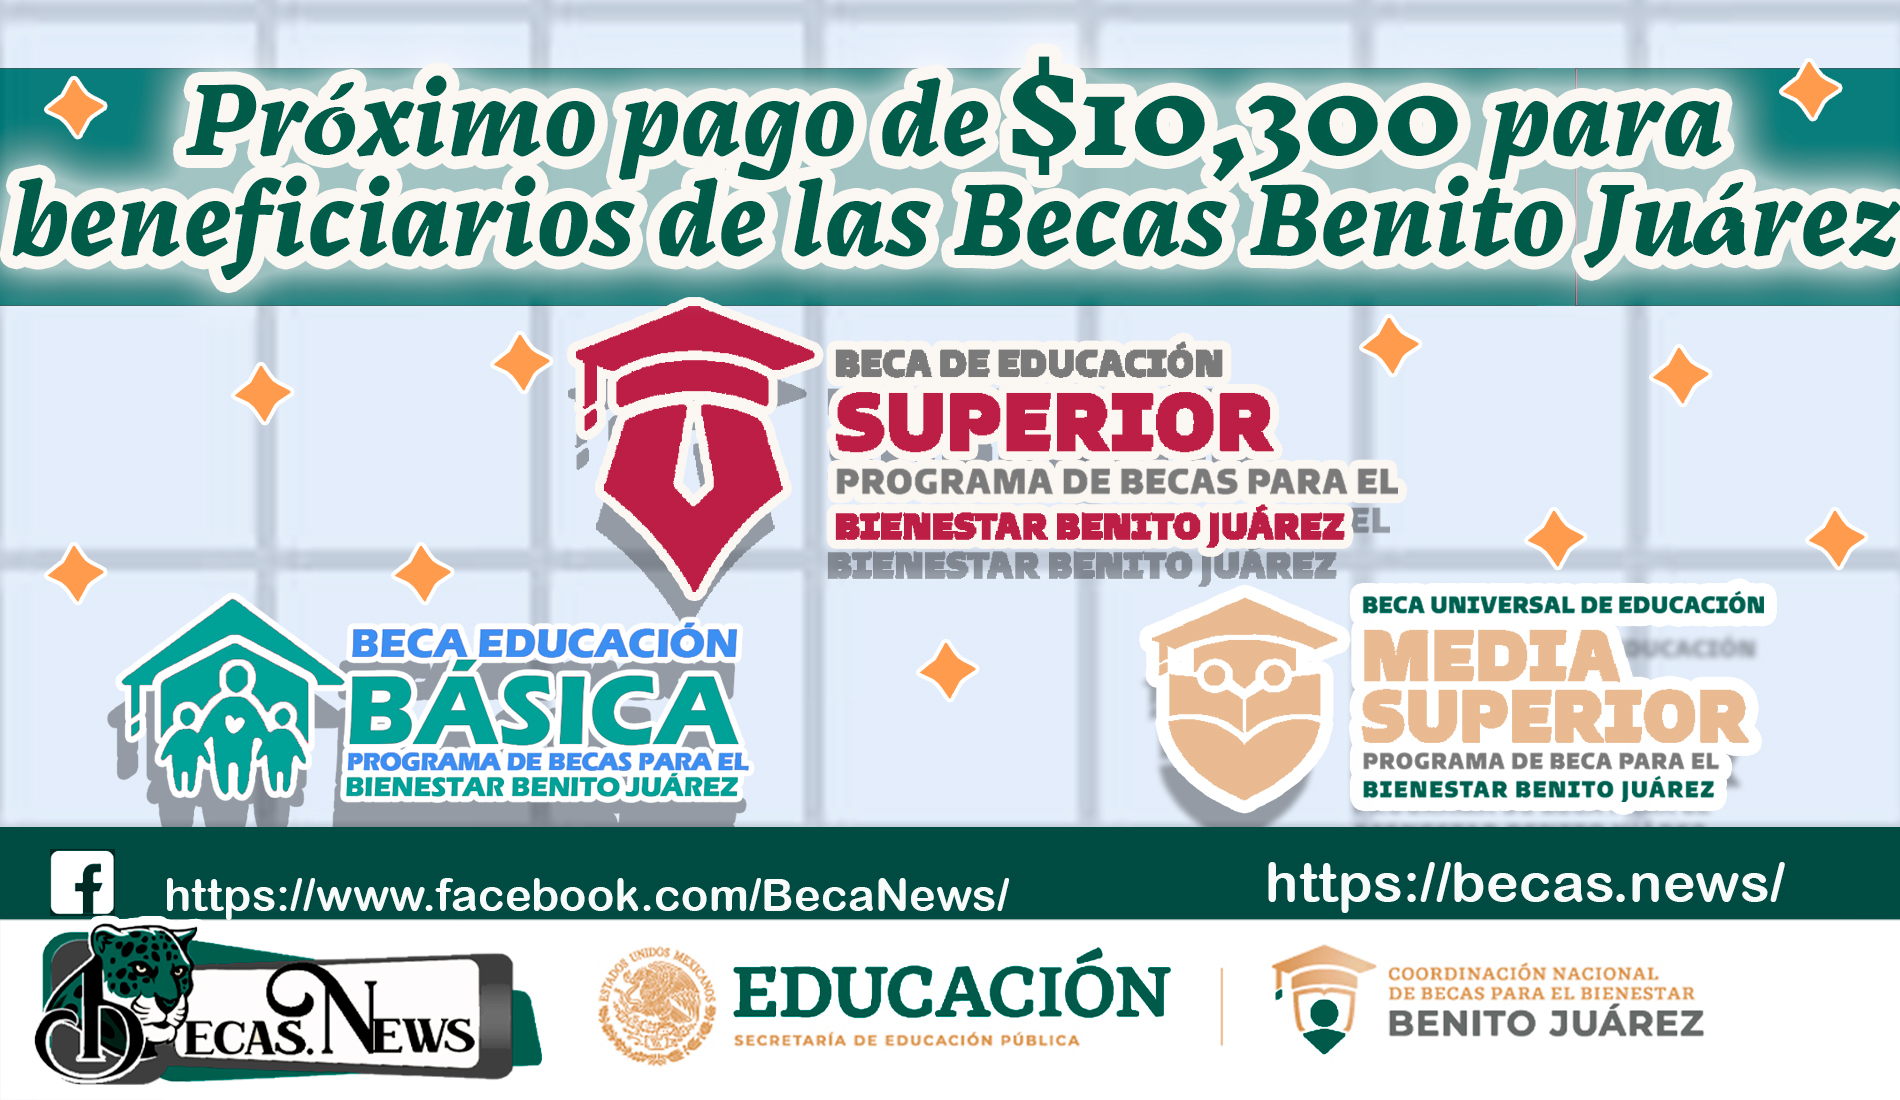 Próximo pago de $10,300 para beneficiarios de las Becas Benito Juárez